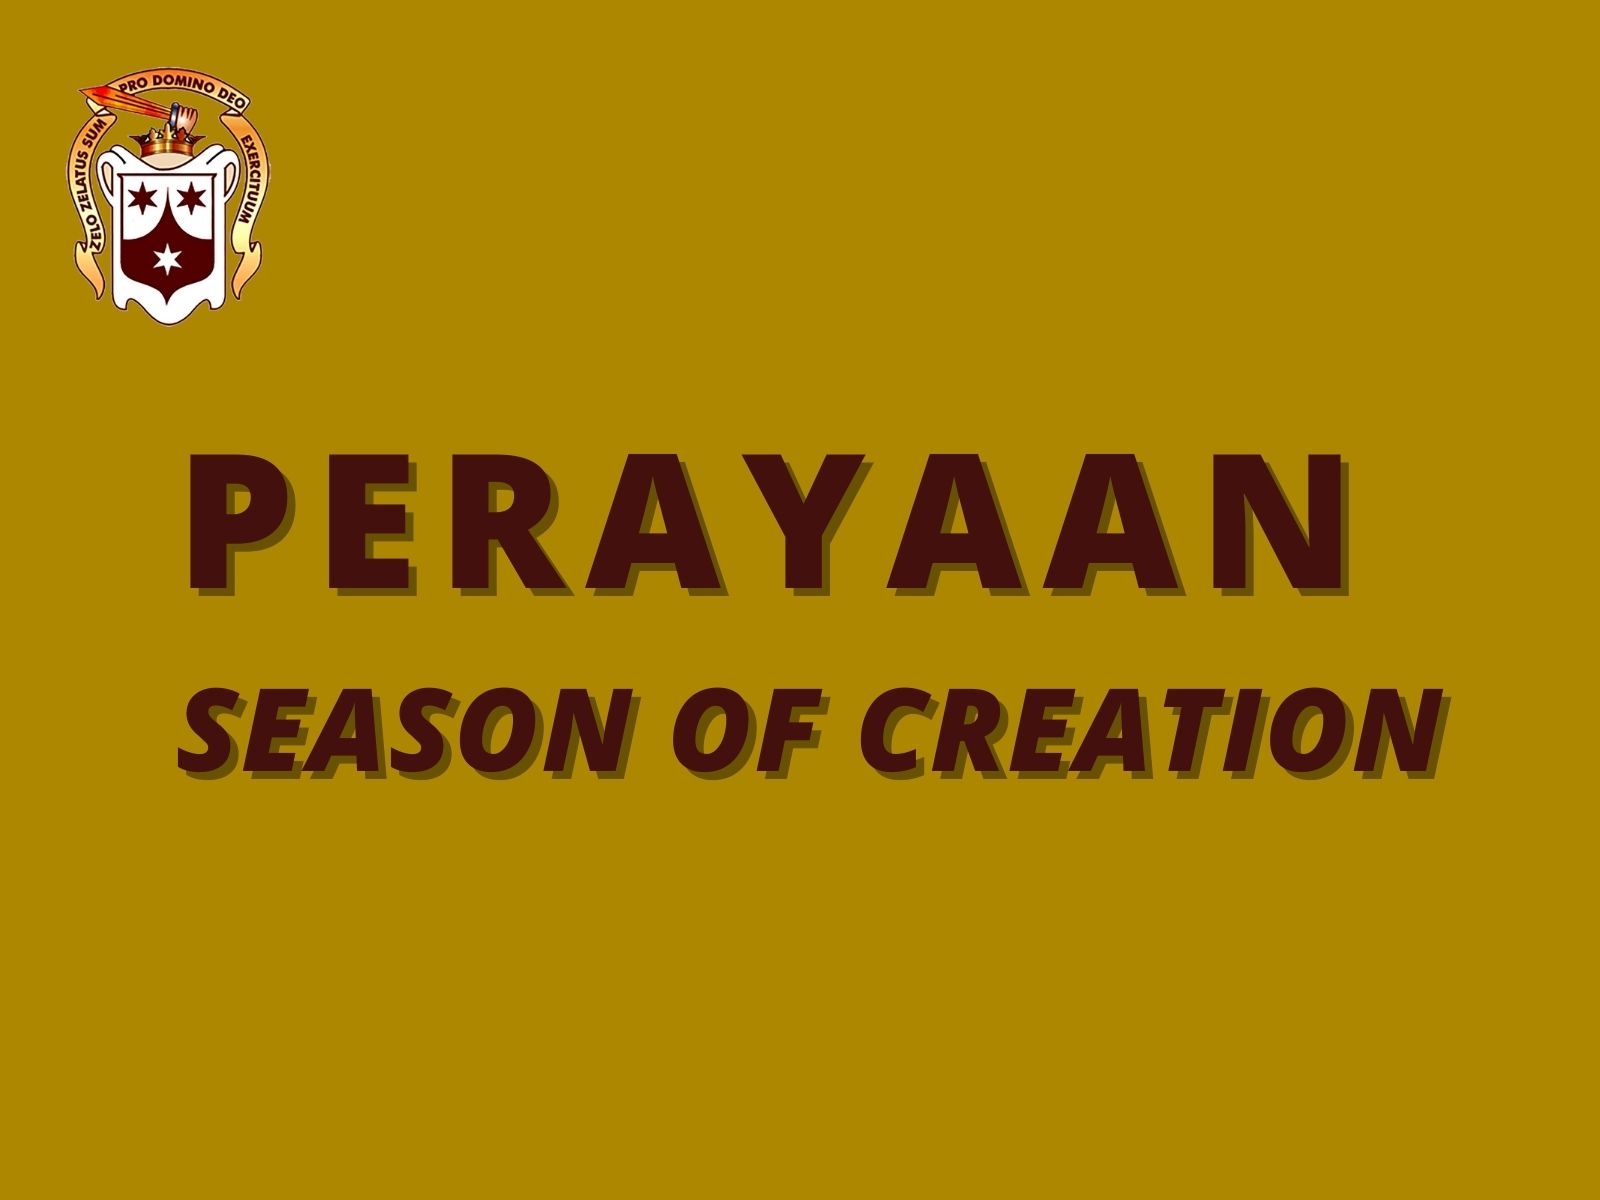 Perayaan “Season of Creation”